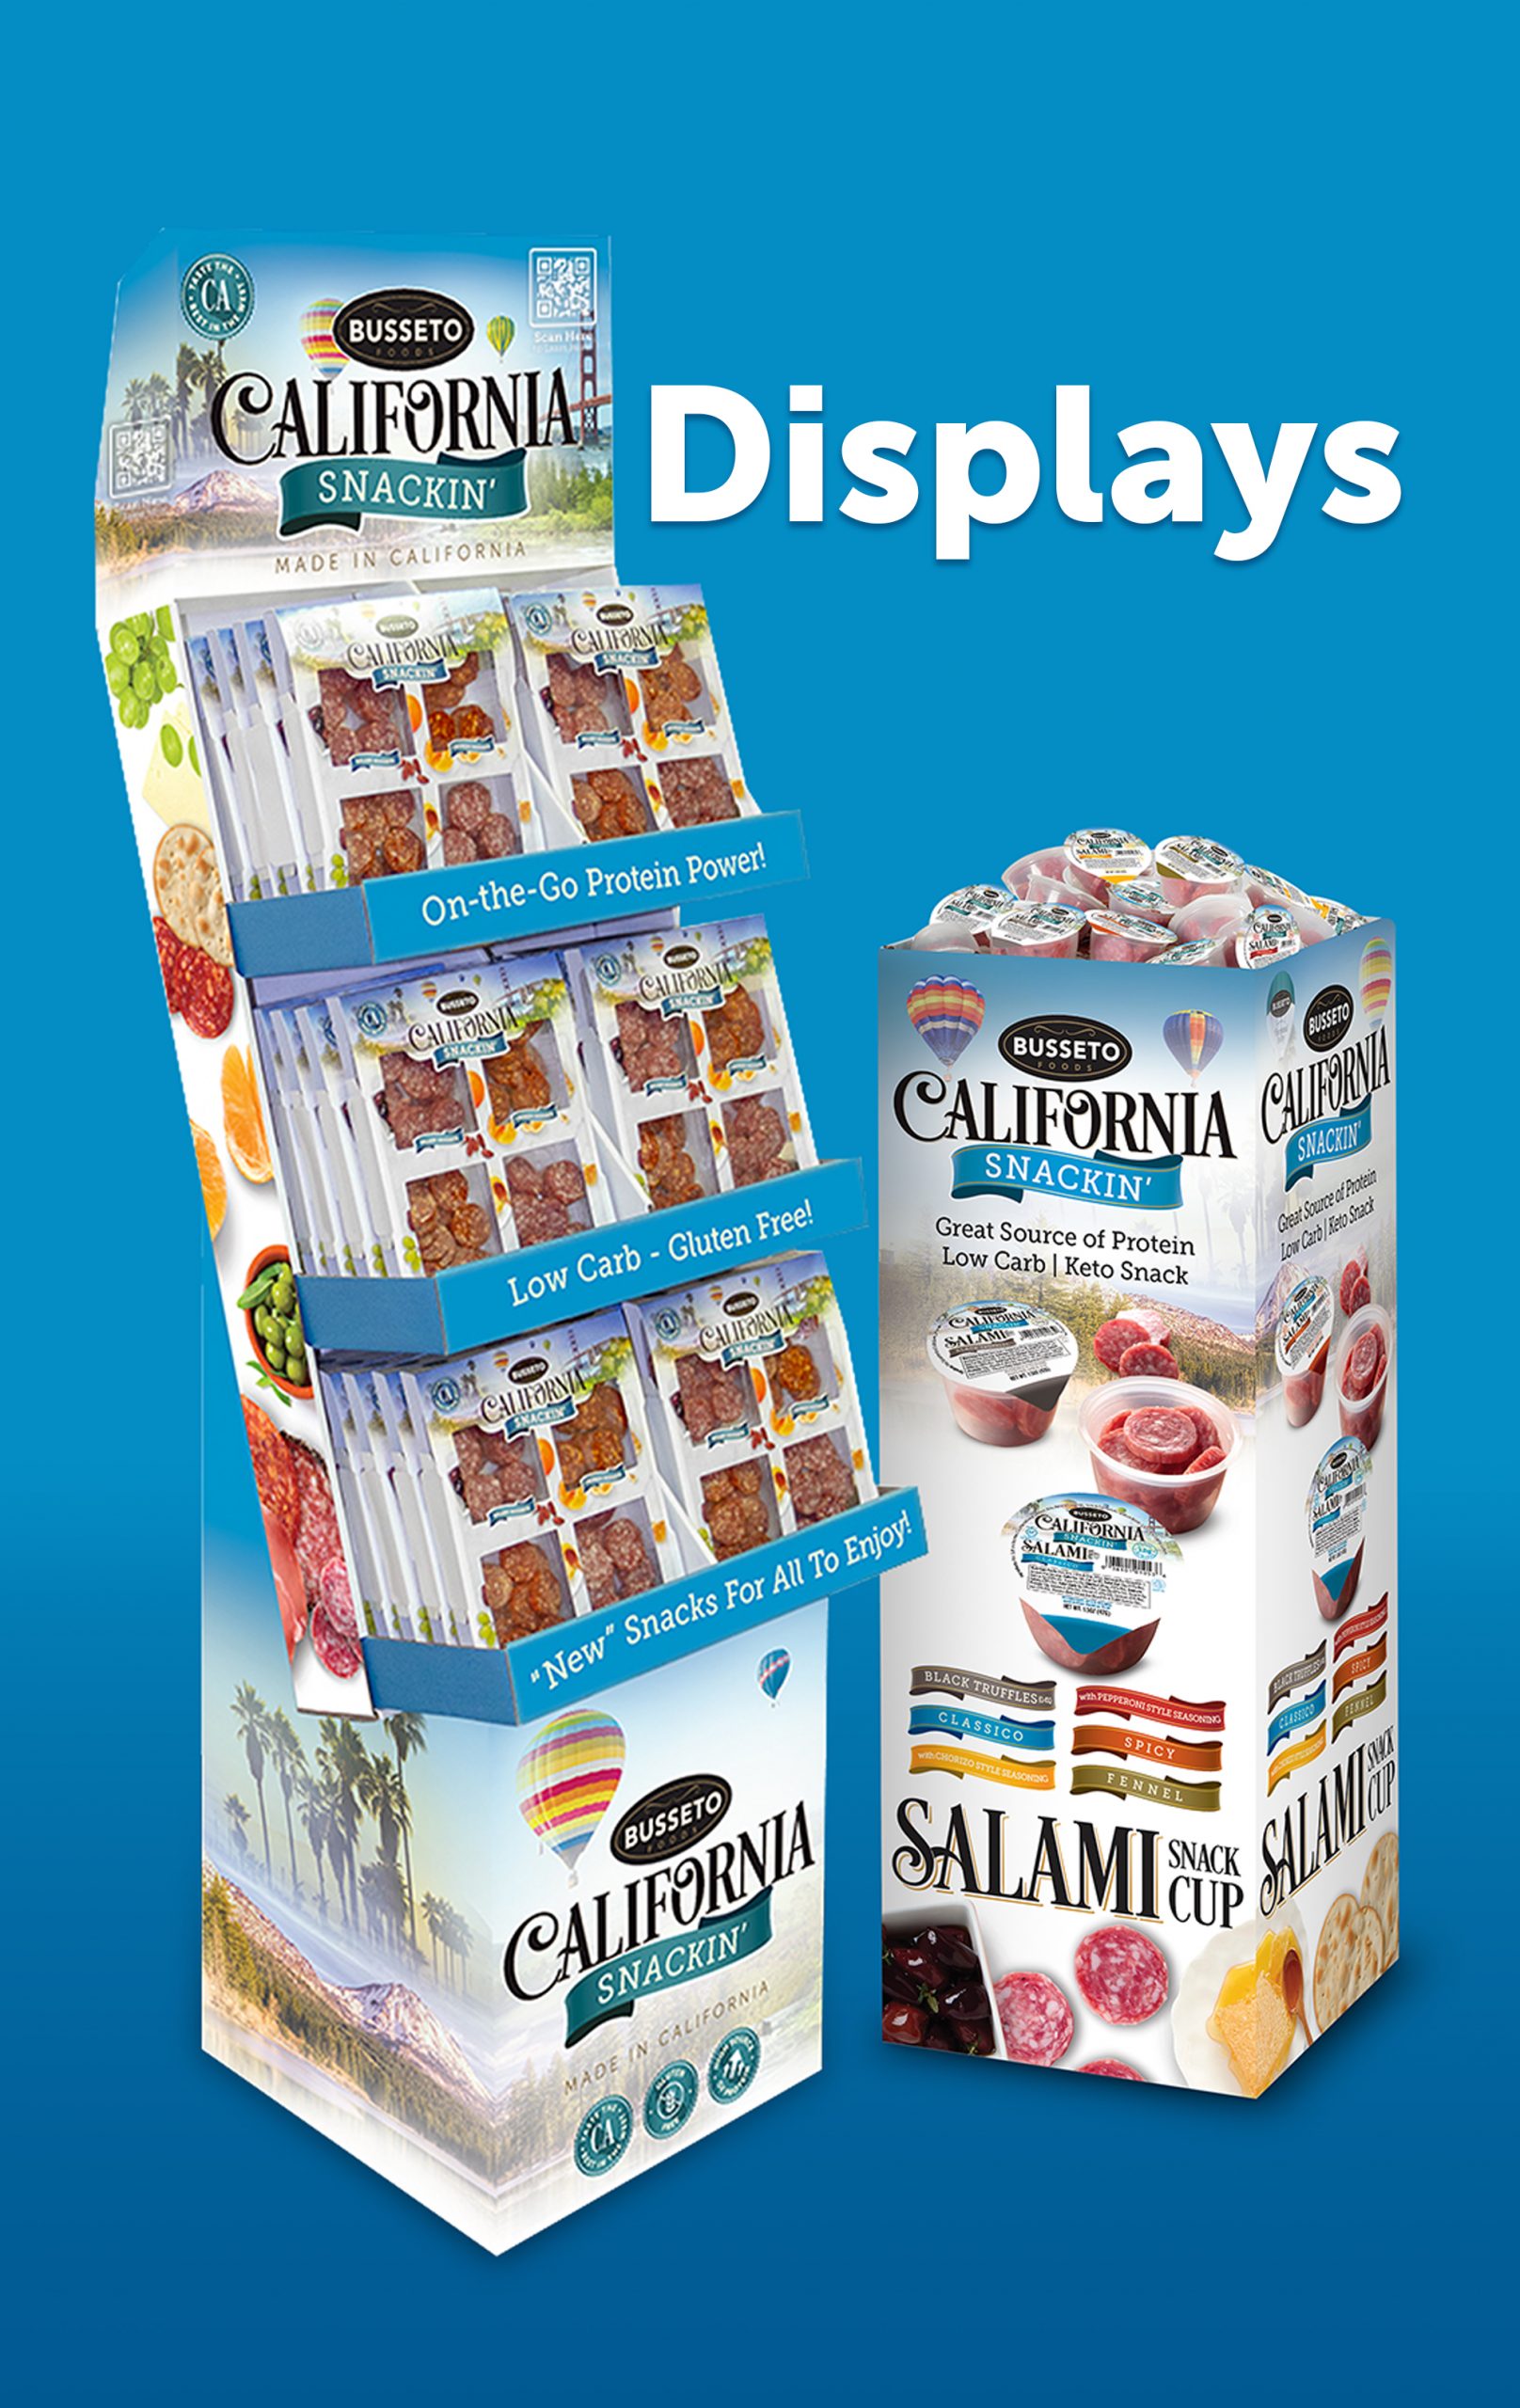 California Snackin' POS Display Design by Octane Advertising Design